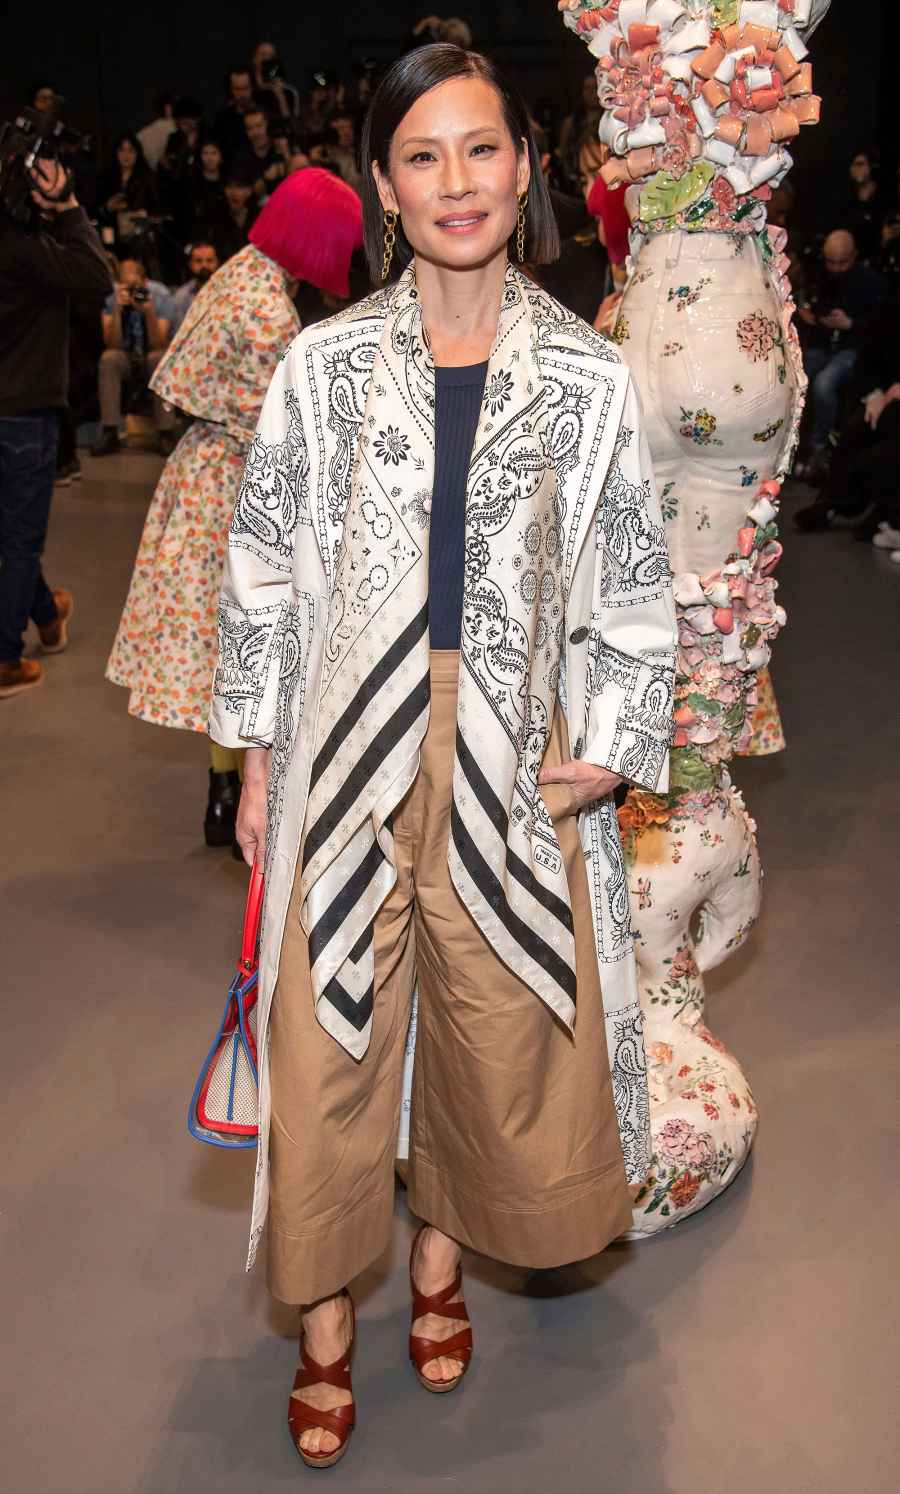 Celebs at New York Fashion Week - Lucy Liu